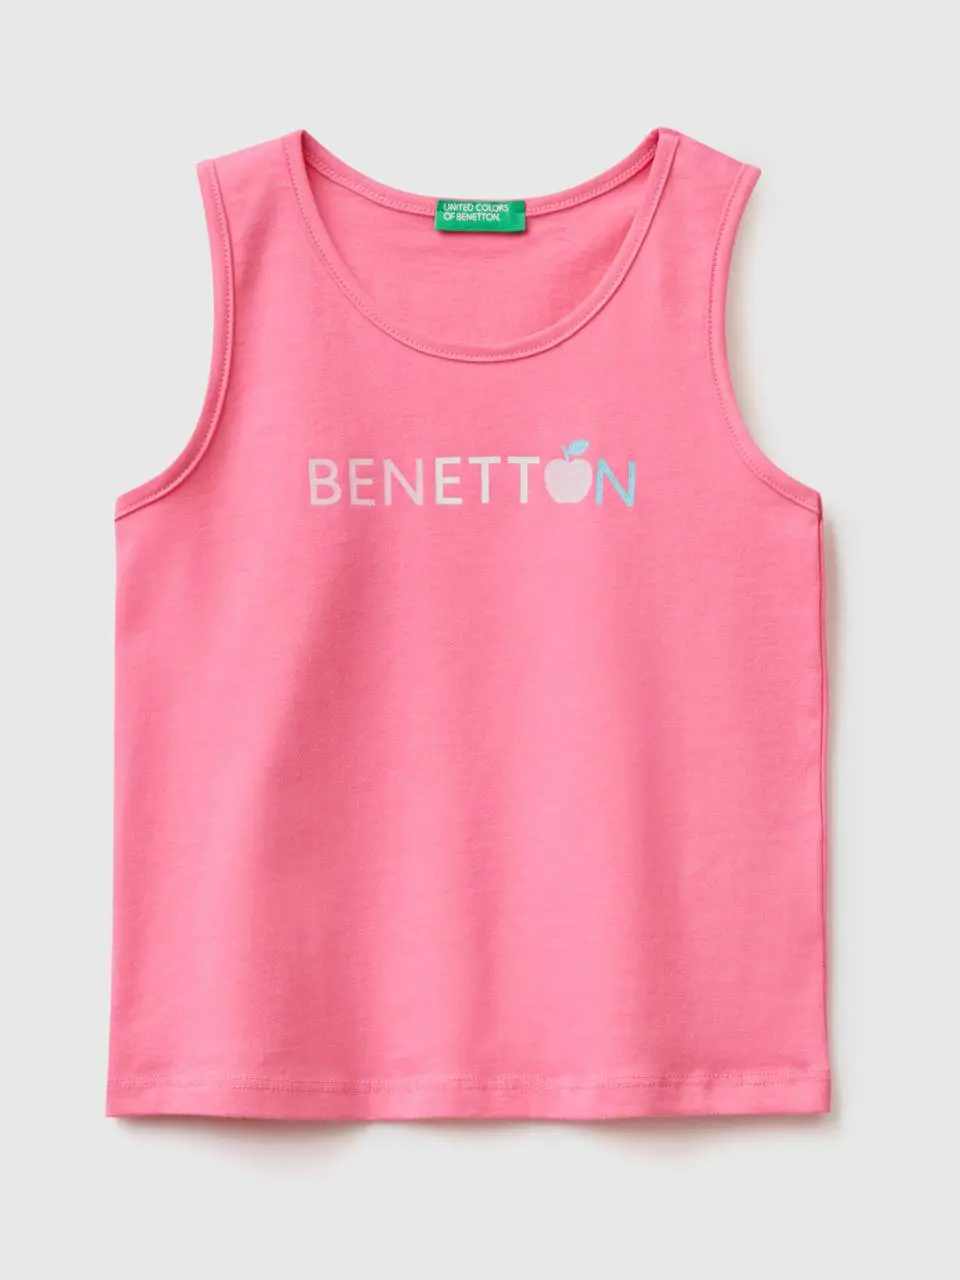 Benetton tank top in organic cotton. 1